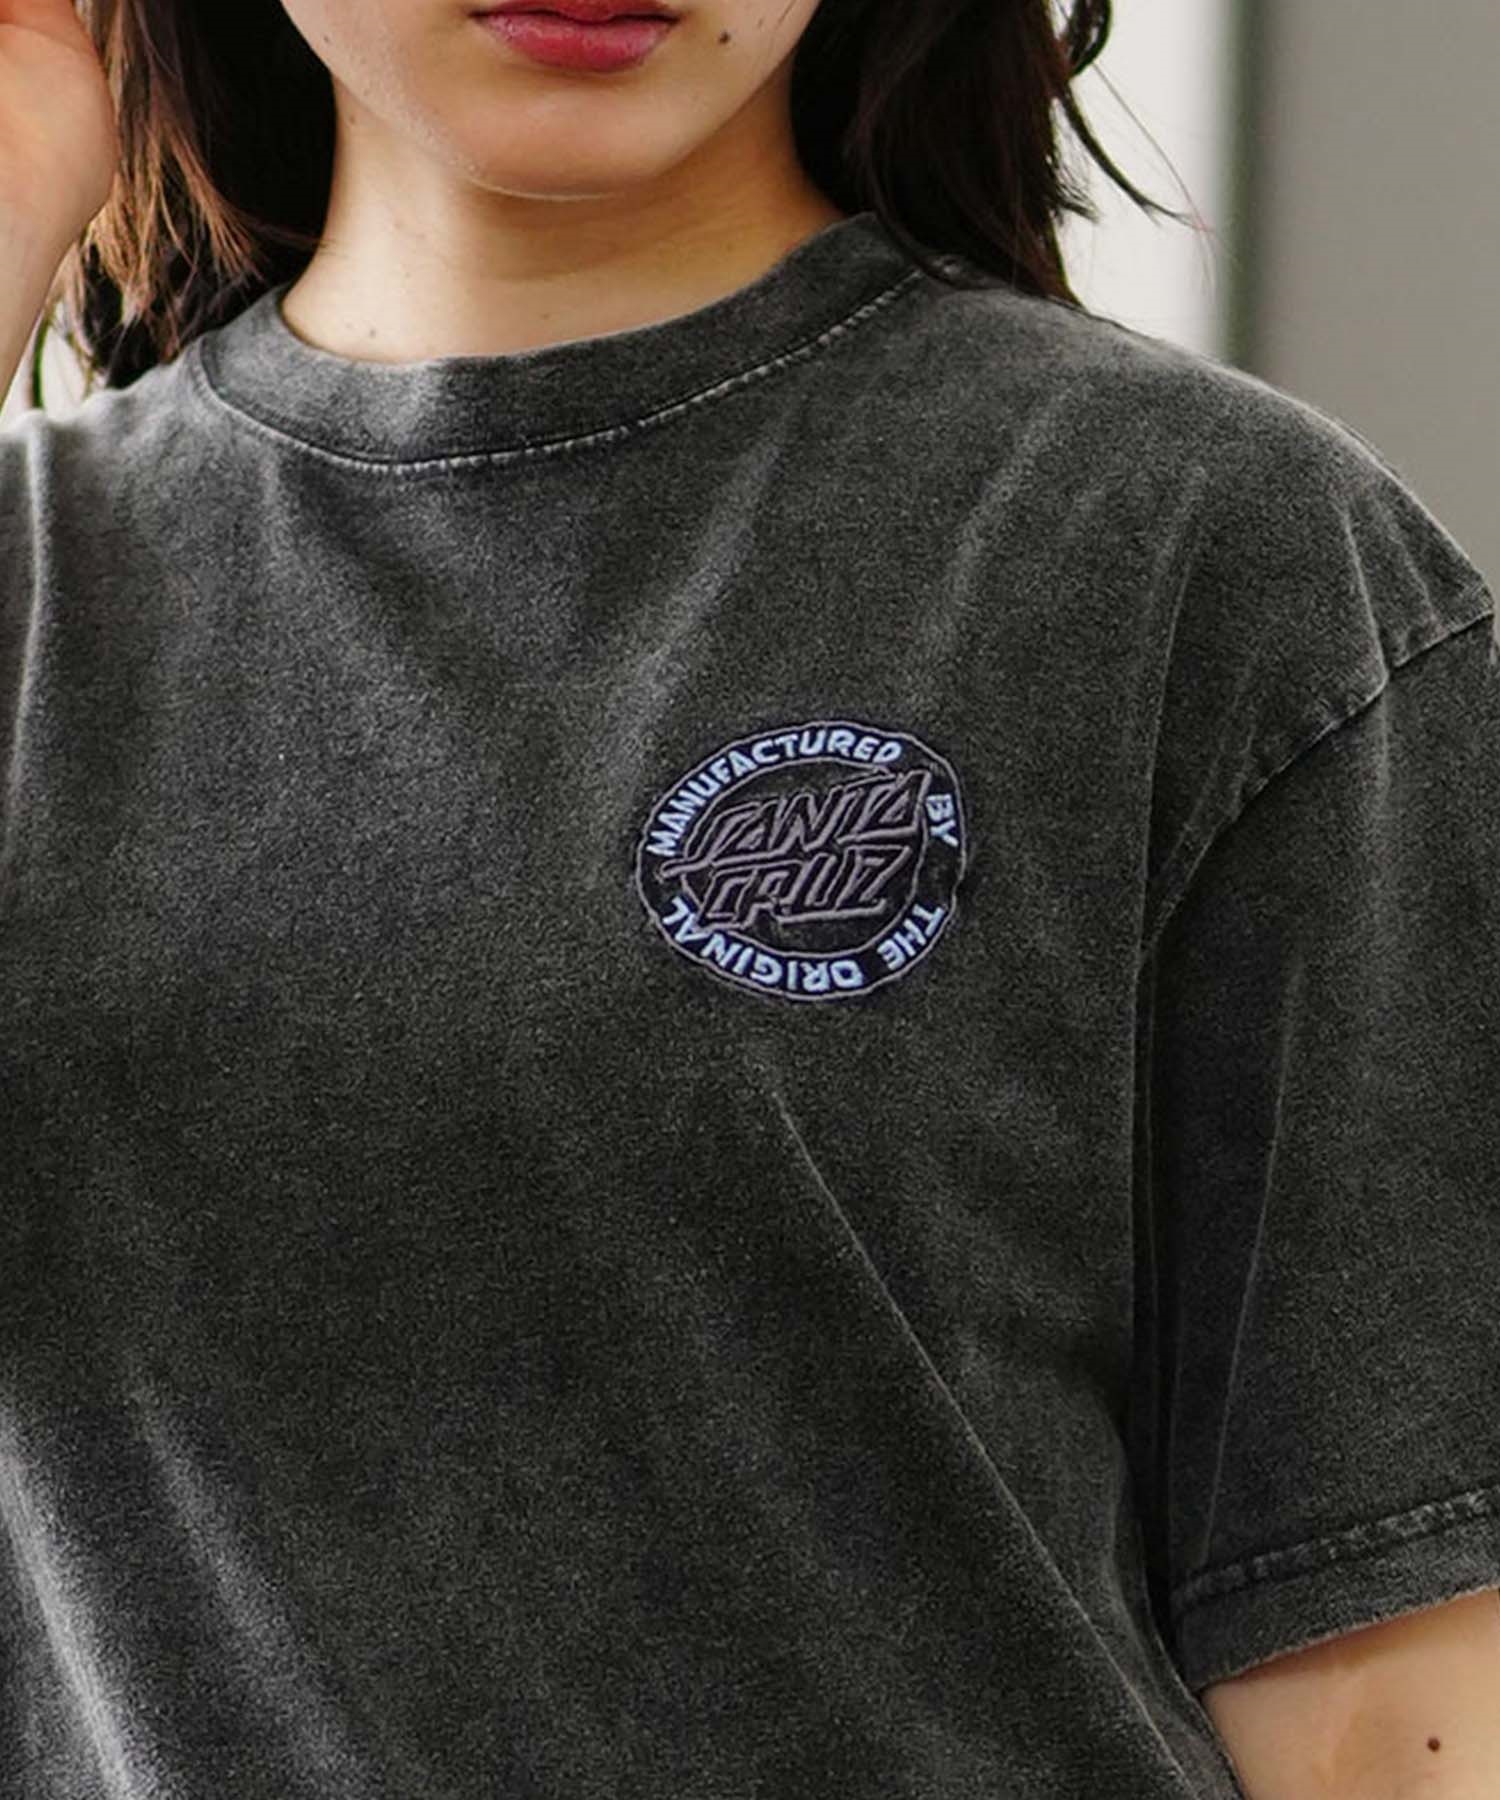 SANTACRUZ サンタクルーズ レディース 半袖 Tシャツ 刺繍ロゴ オーバーサイズ ユニセックス ムラサキスポーツ限定 502242441(BLUE-M)